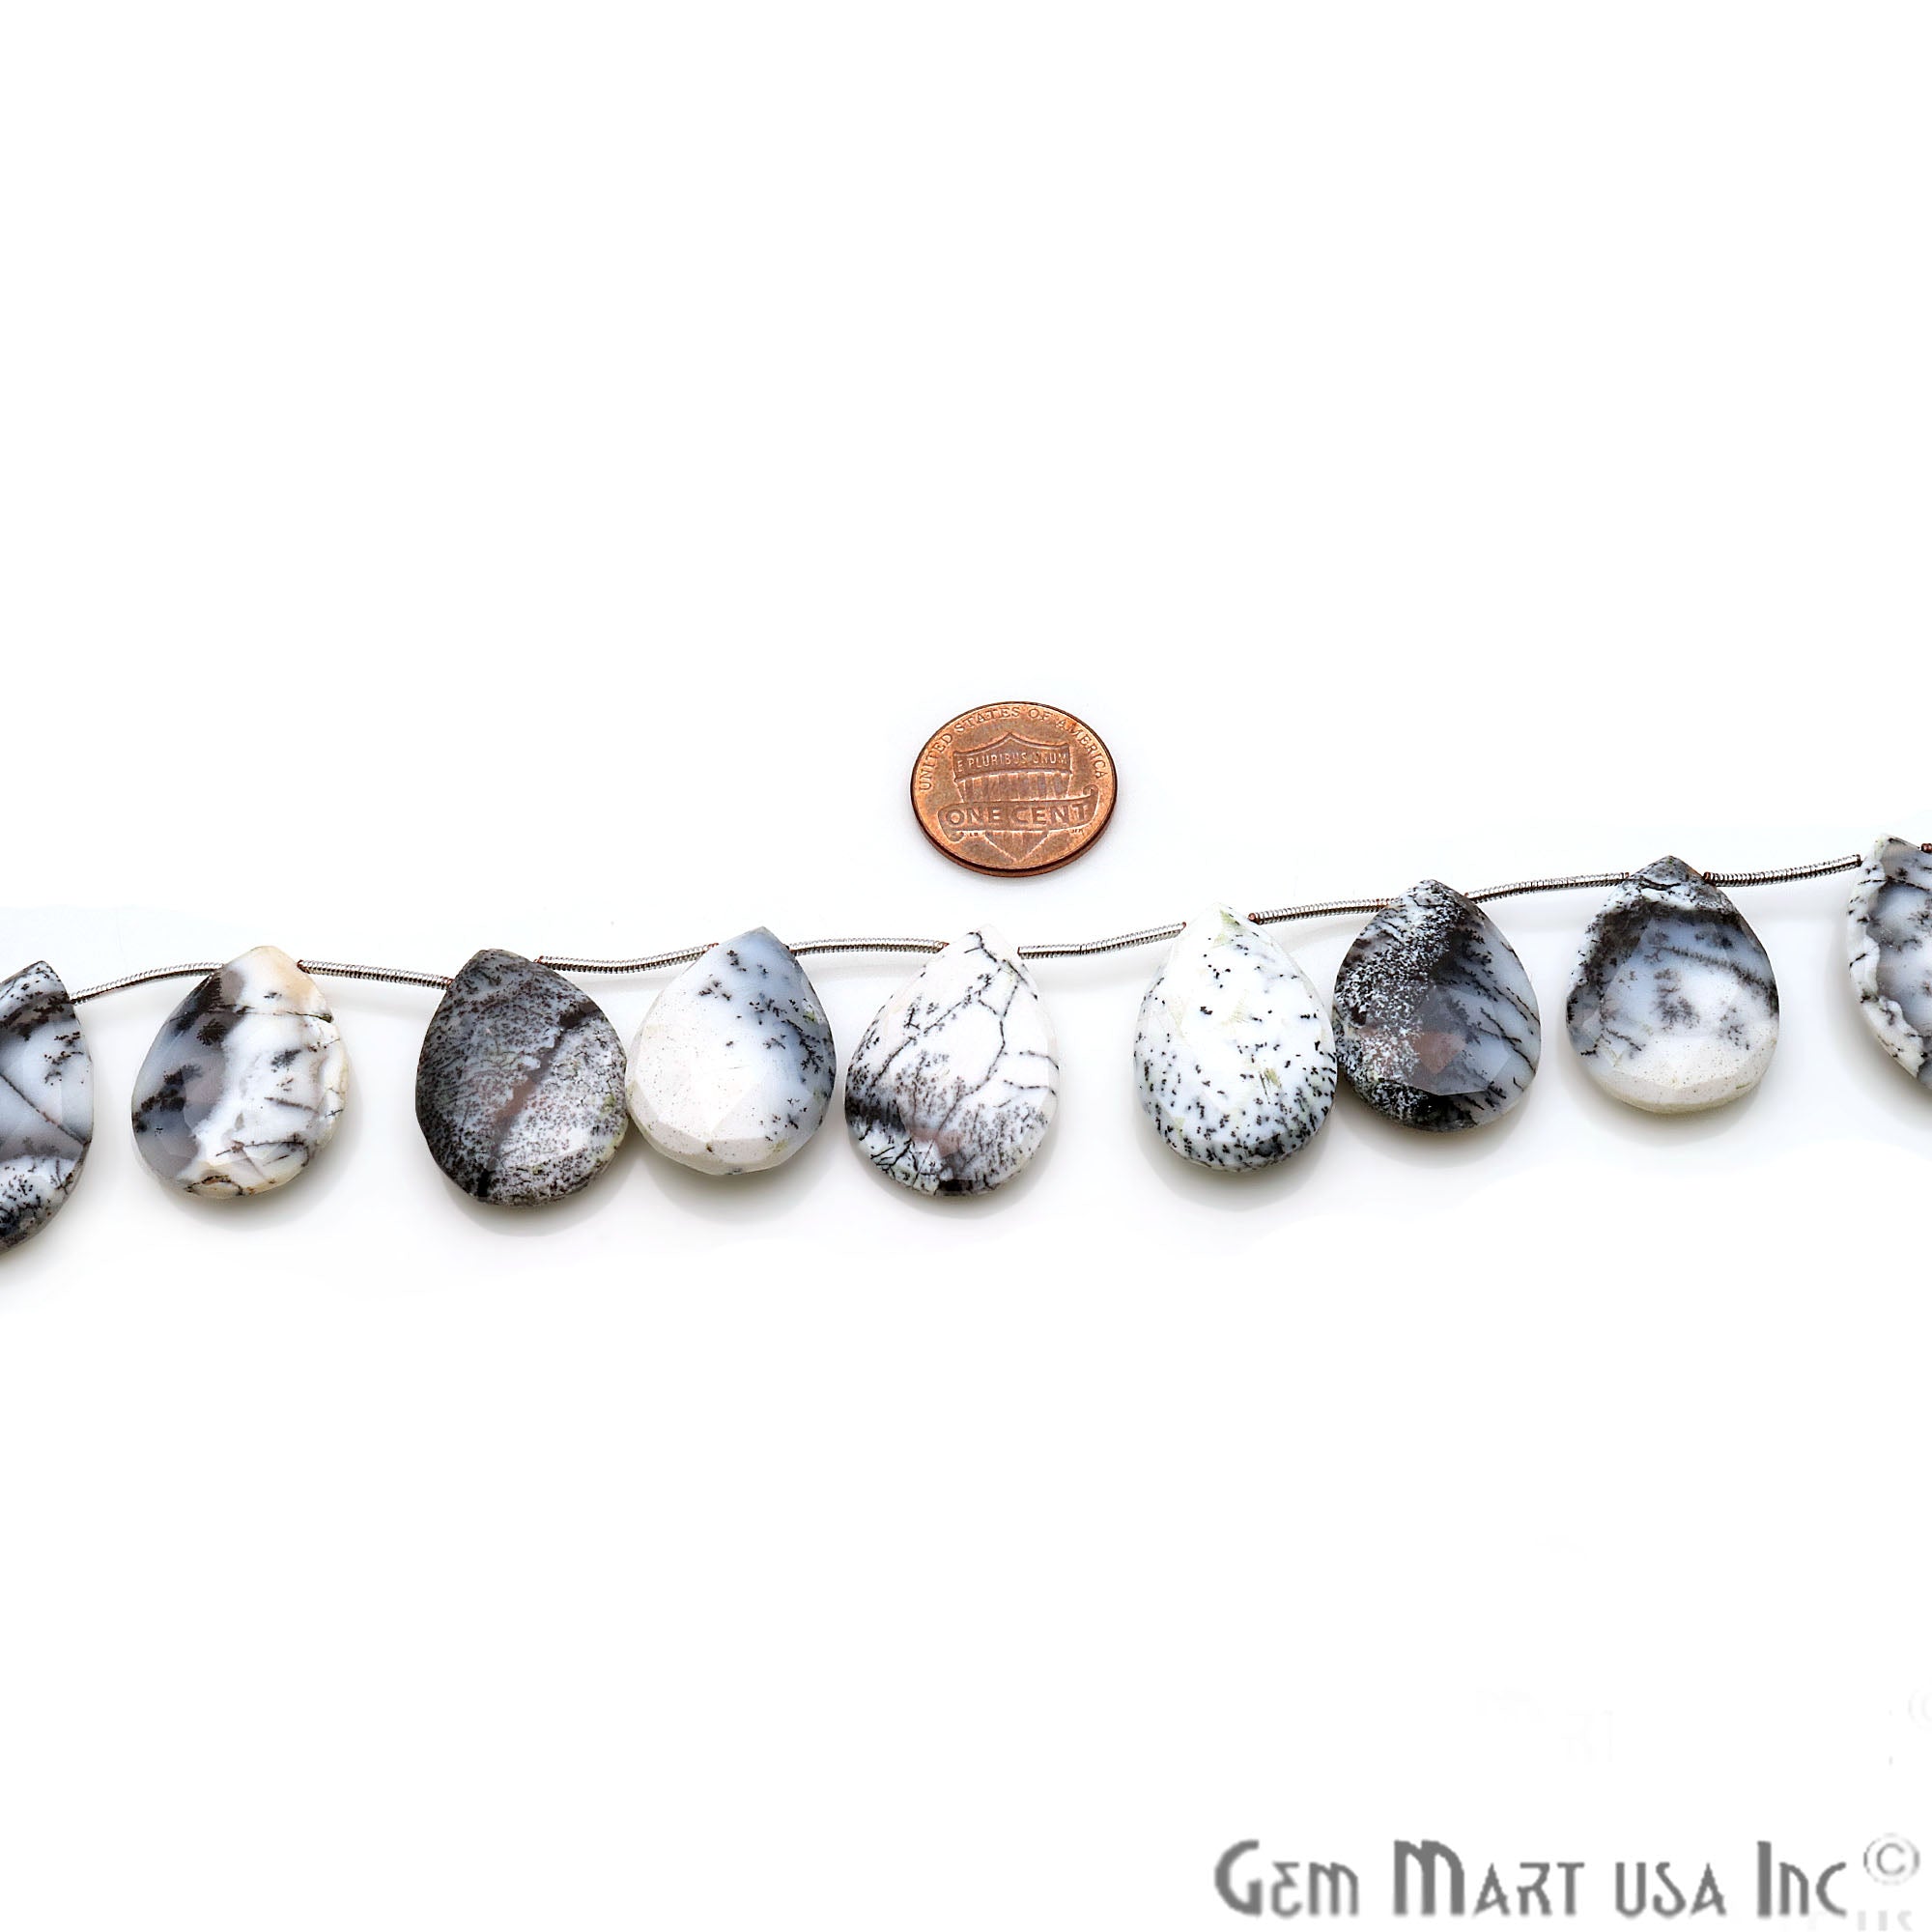 Dendrite Opal Pears 25x18mm Crafting Beads Gemstone Strands 8INCH - GemMartUSA